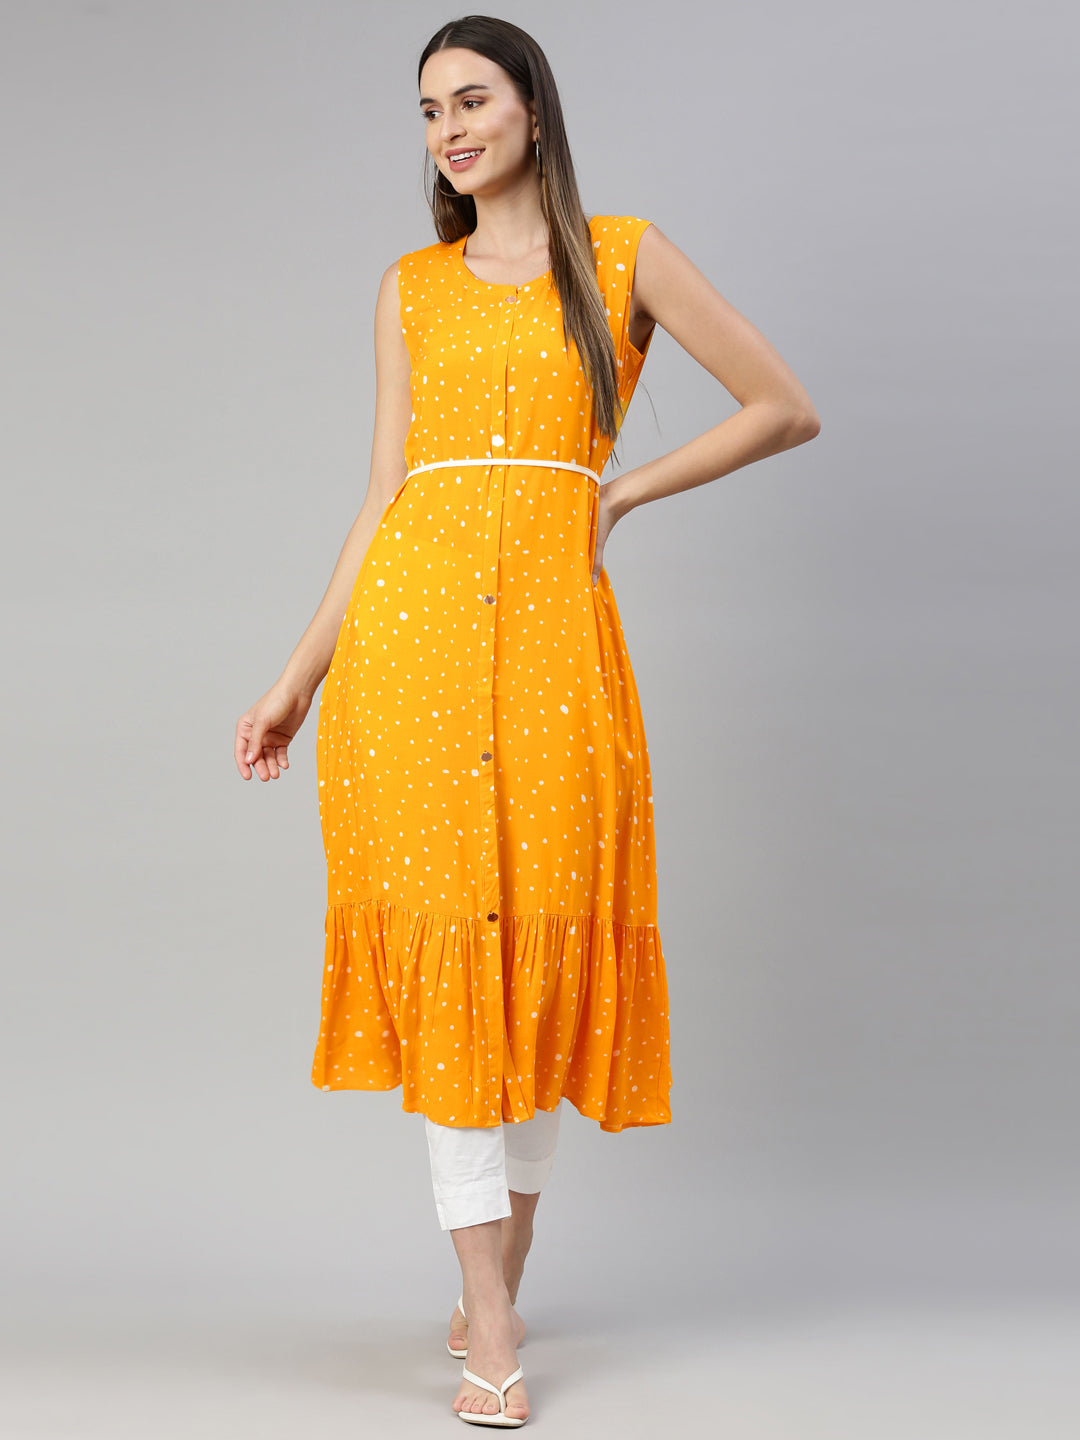 Neeru'S Yellow Color Rayon Fabric Kurta